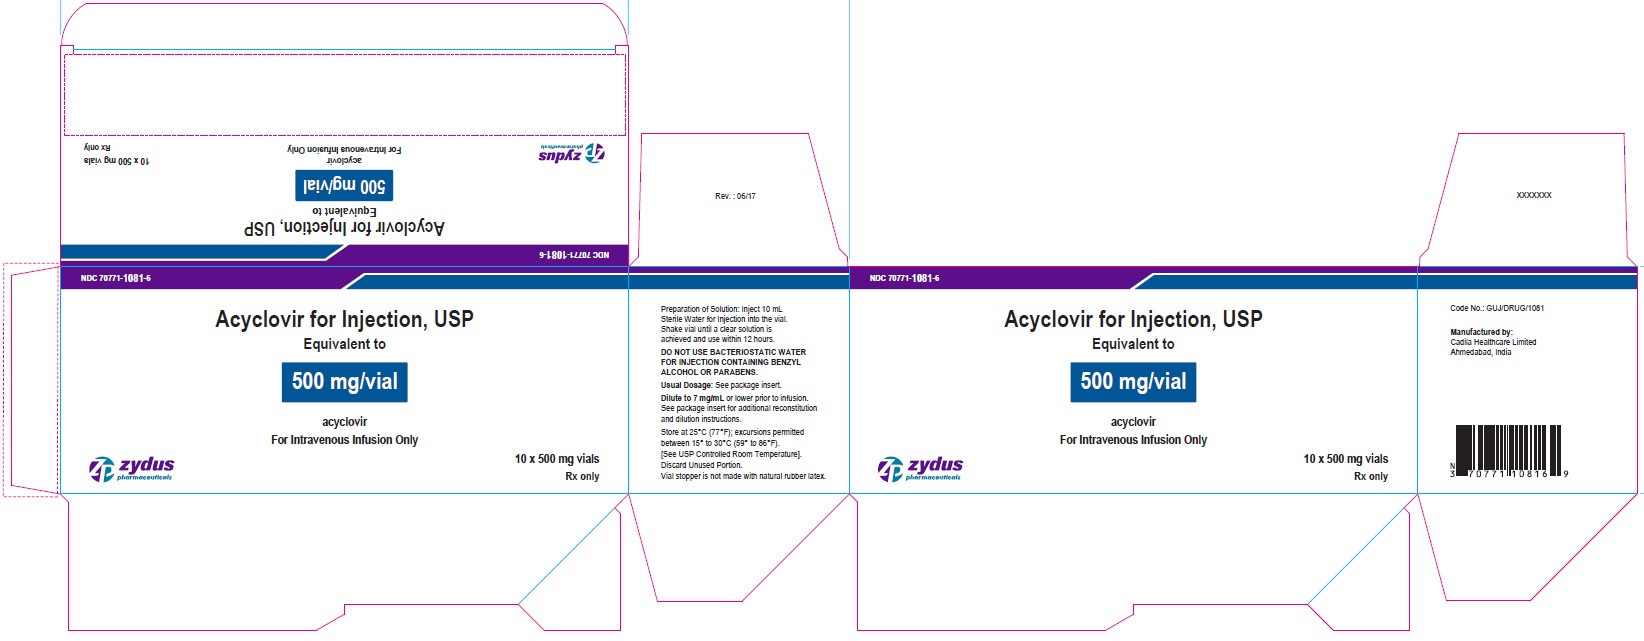 Acyclovir for Injection USP, 500 mg/Vial